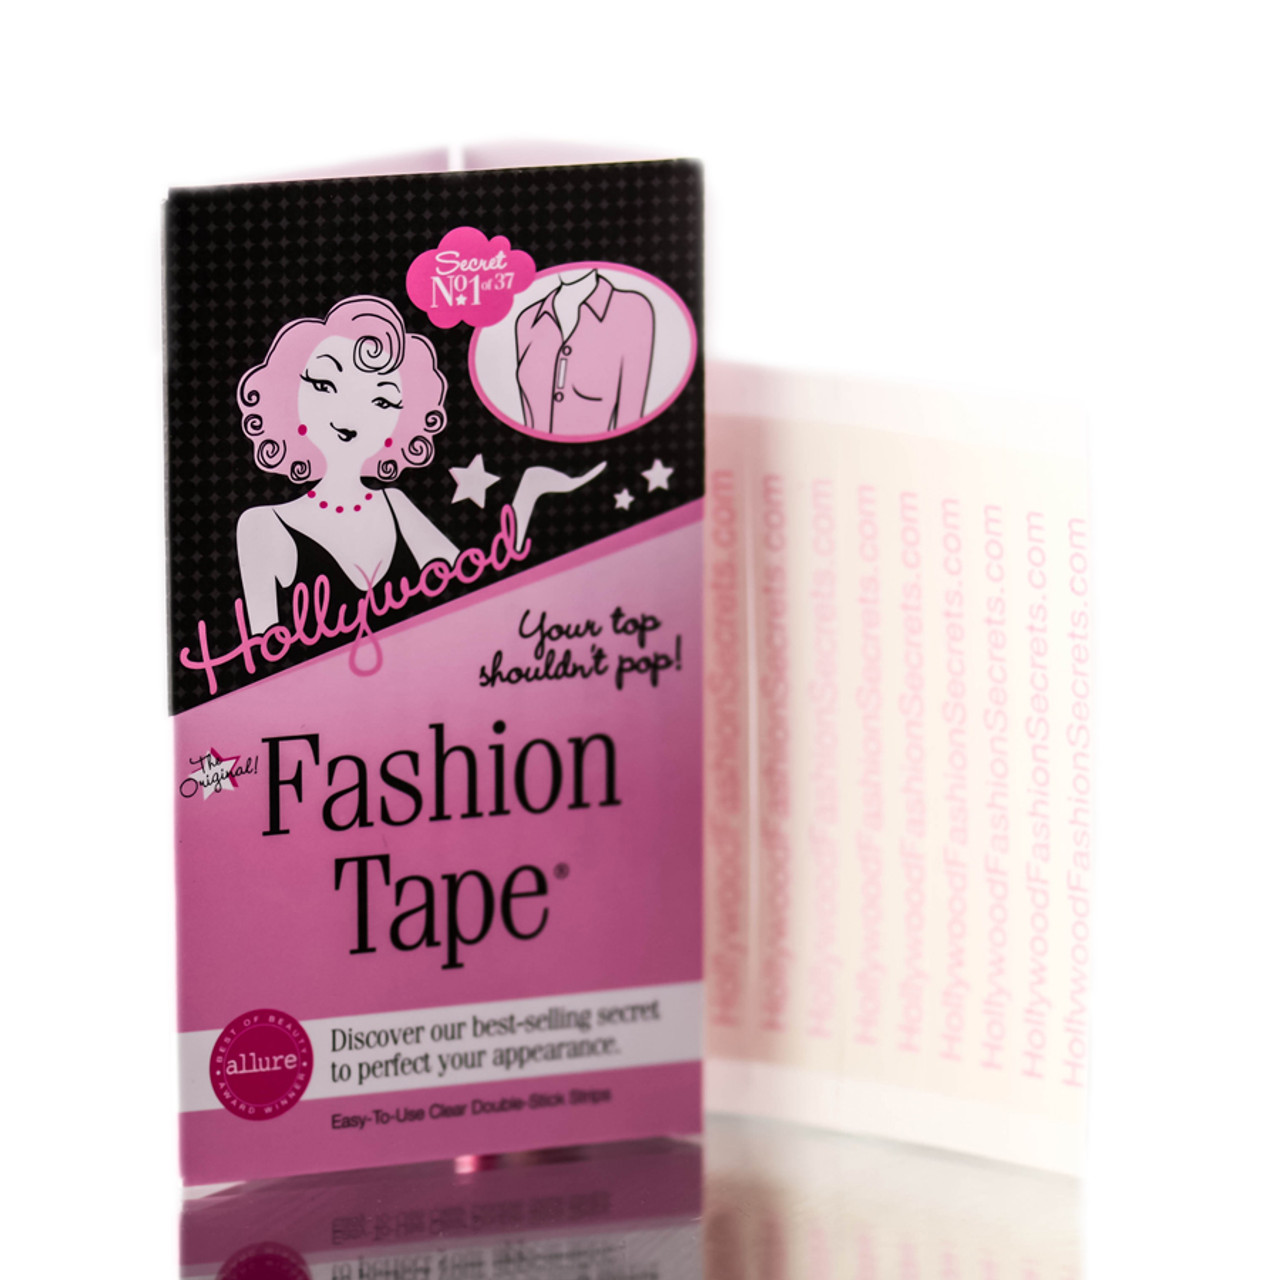 Hollywood Fashion Tape - Hollywood Fashion Secrets - Fashion Tape